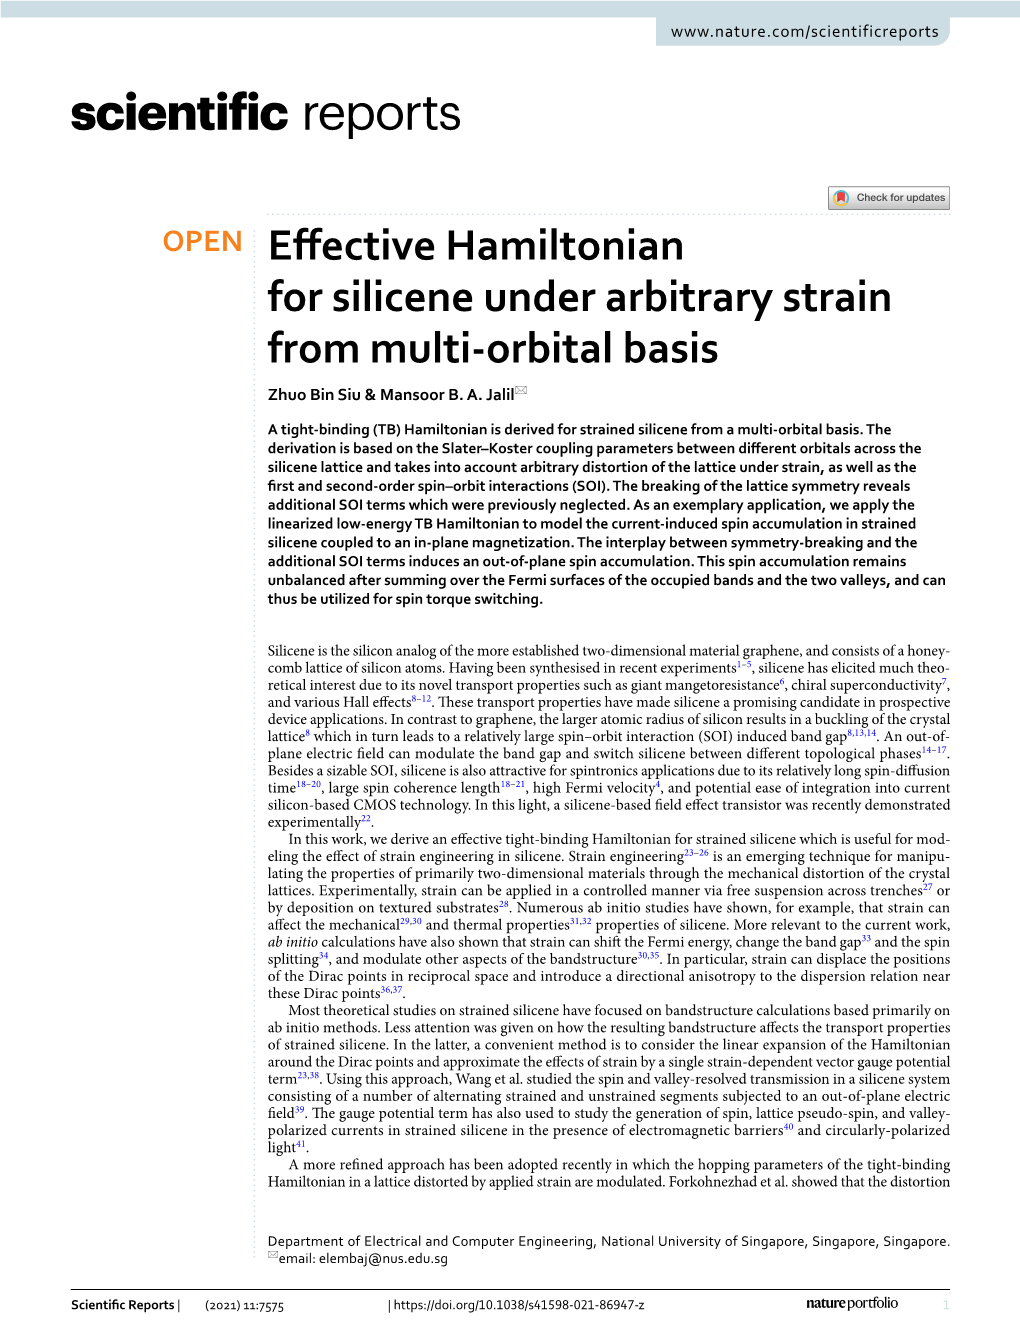 Effective Hamiltonian for Silicene Under Arbitrary Strain From